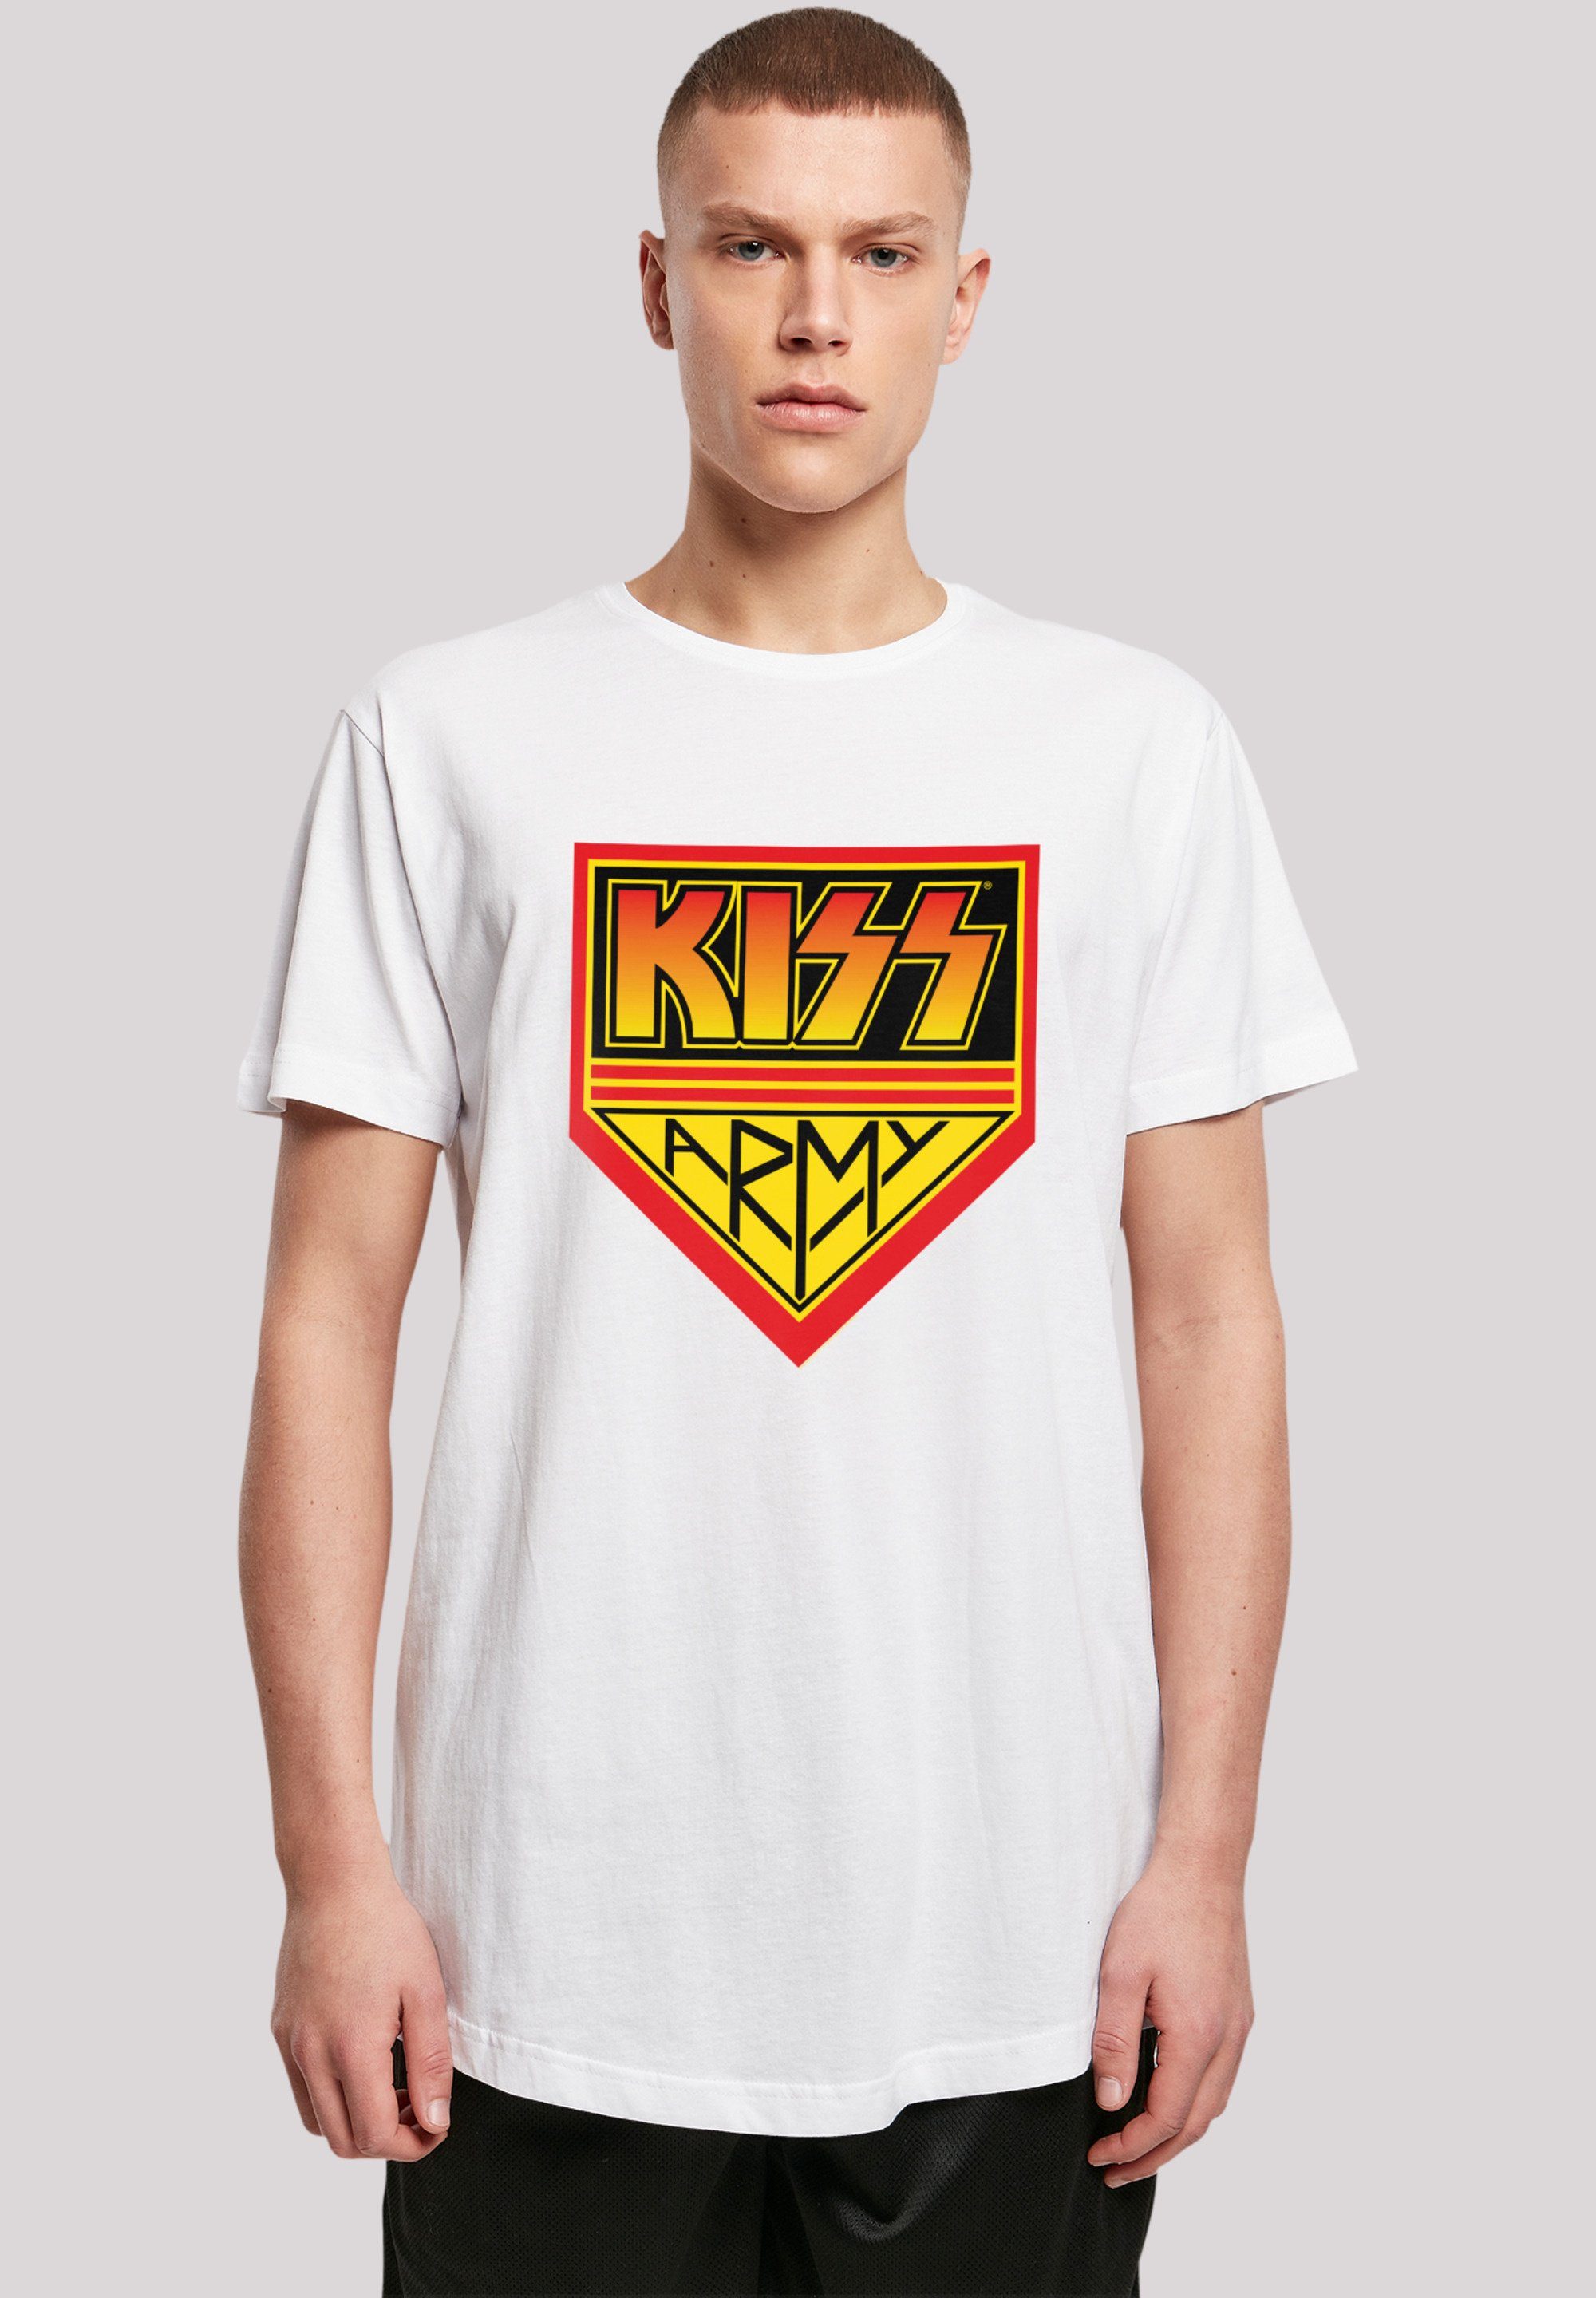 F4NT4STIC T-Shirt Kiss Rock Band Army Logo Premium Qualität, Musik, By Rock Off weiß